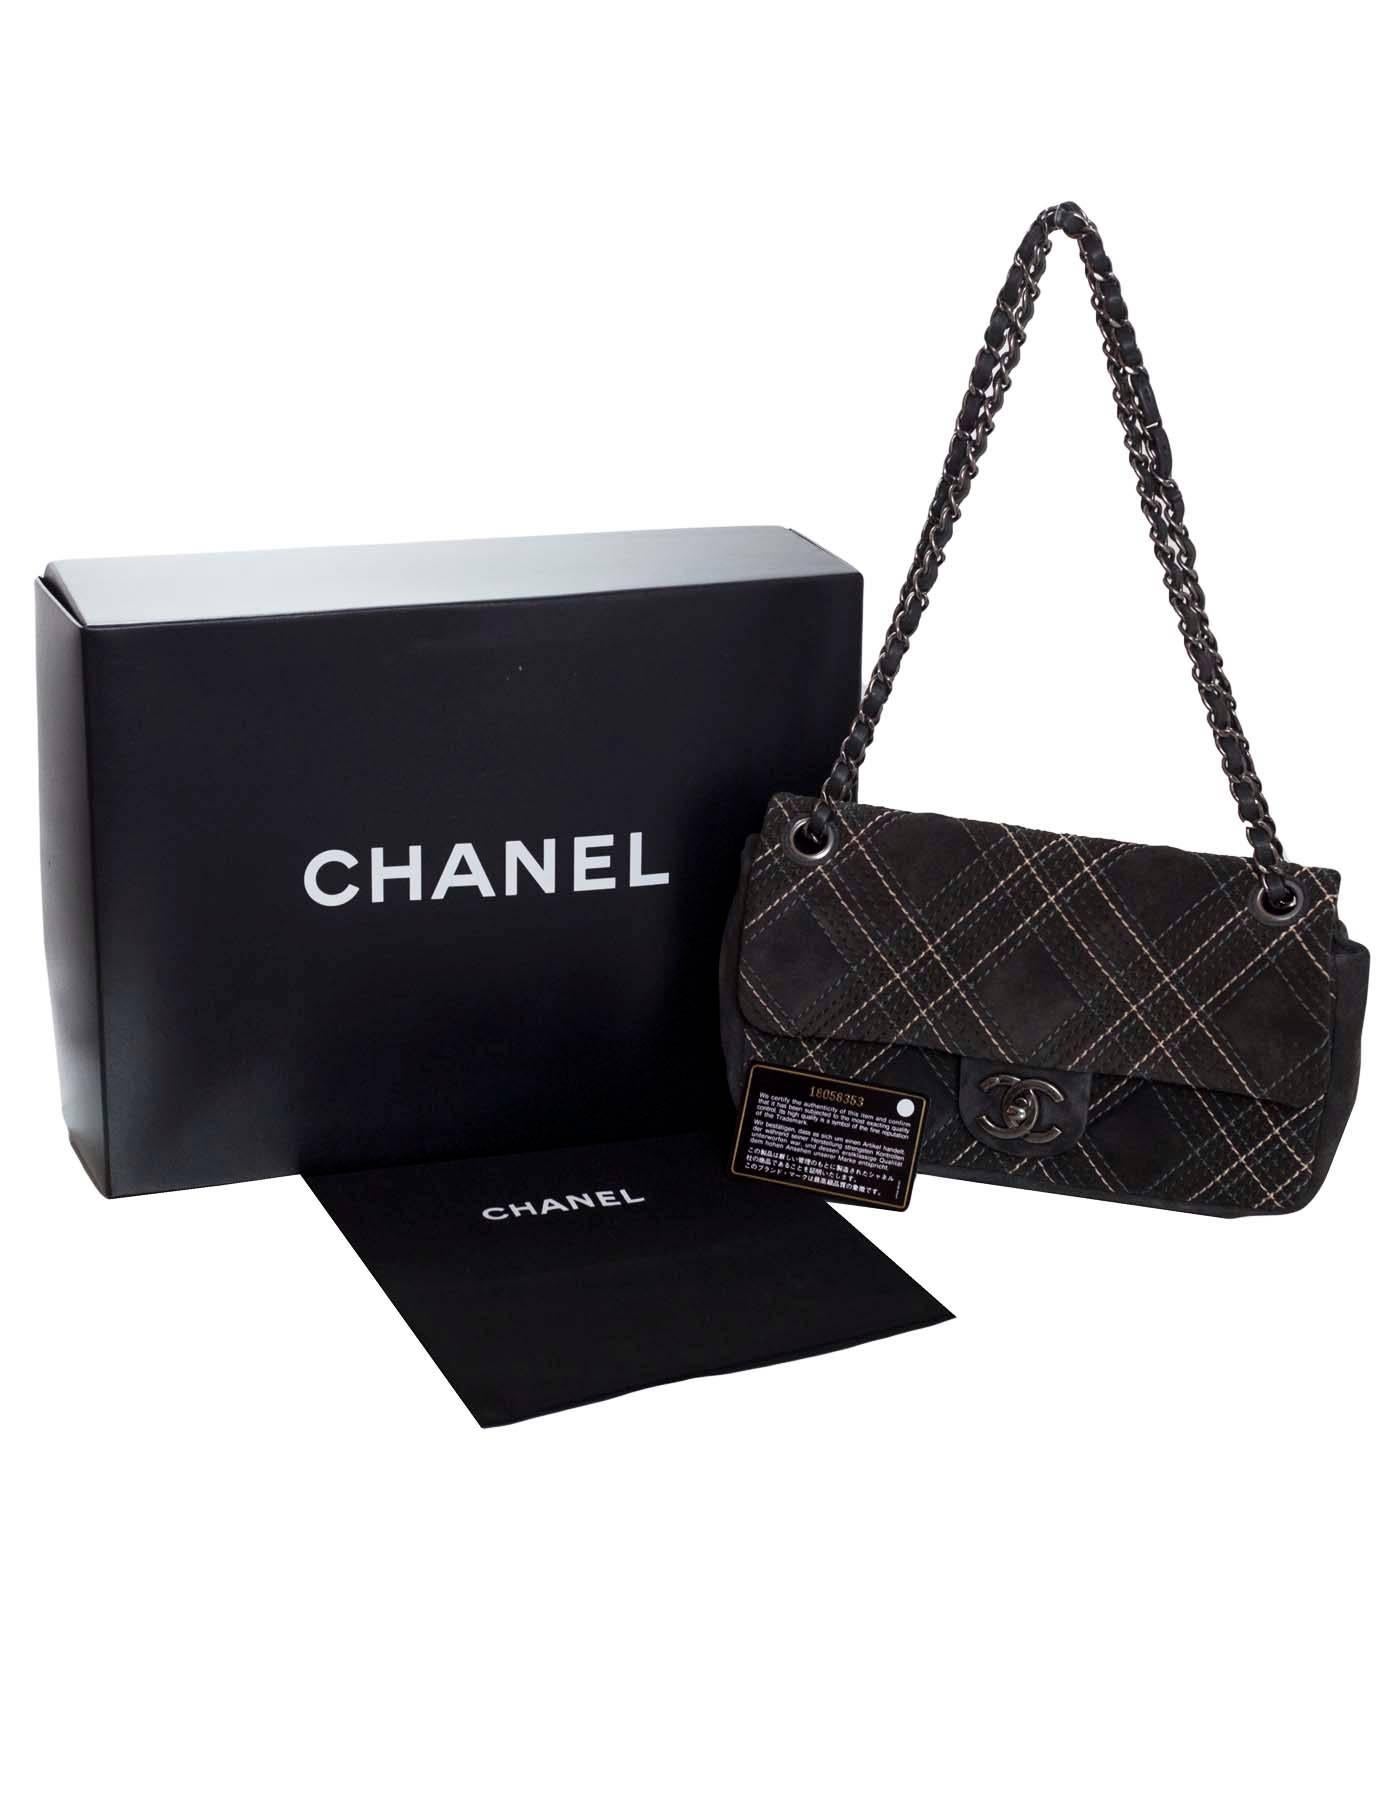 Chanel '13 Grey Suede Paris/Edinburg Saltire Stitch Flap Bag with Auth Card, Box 4